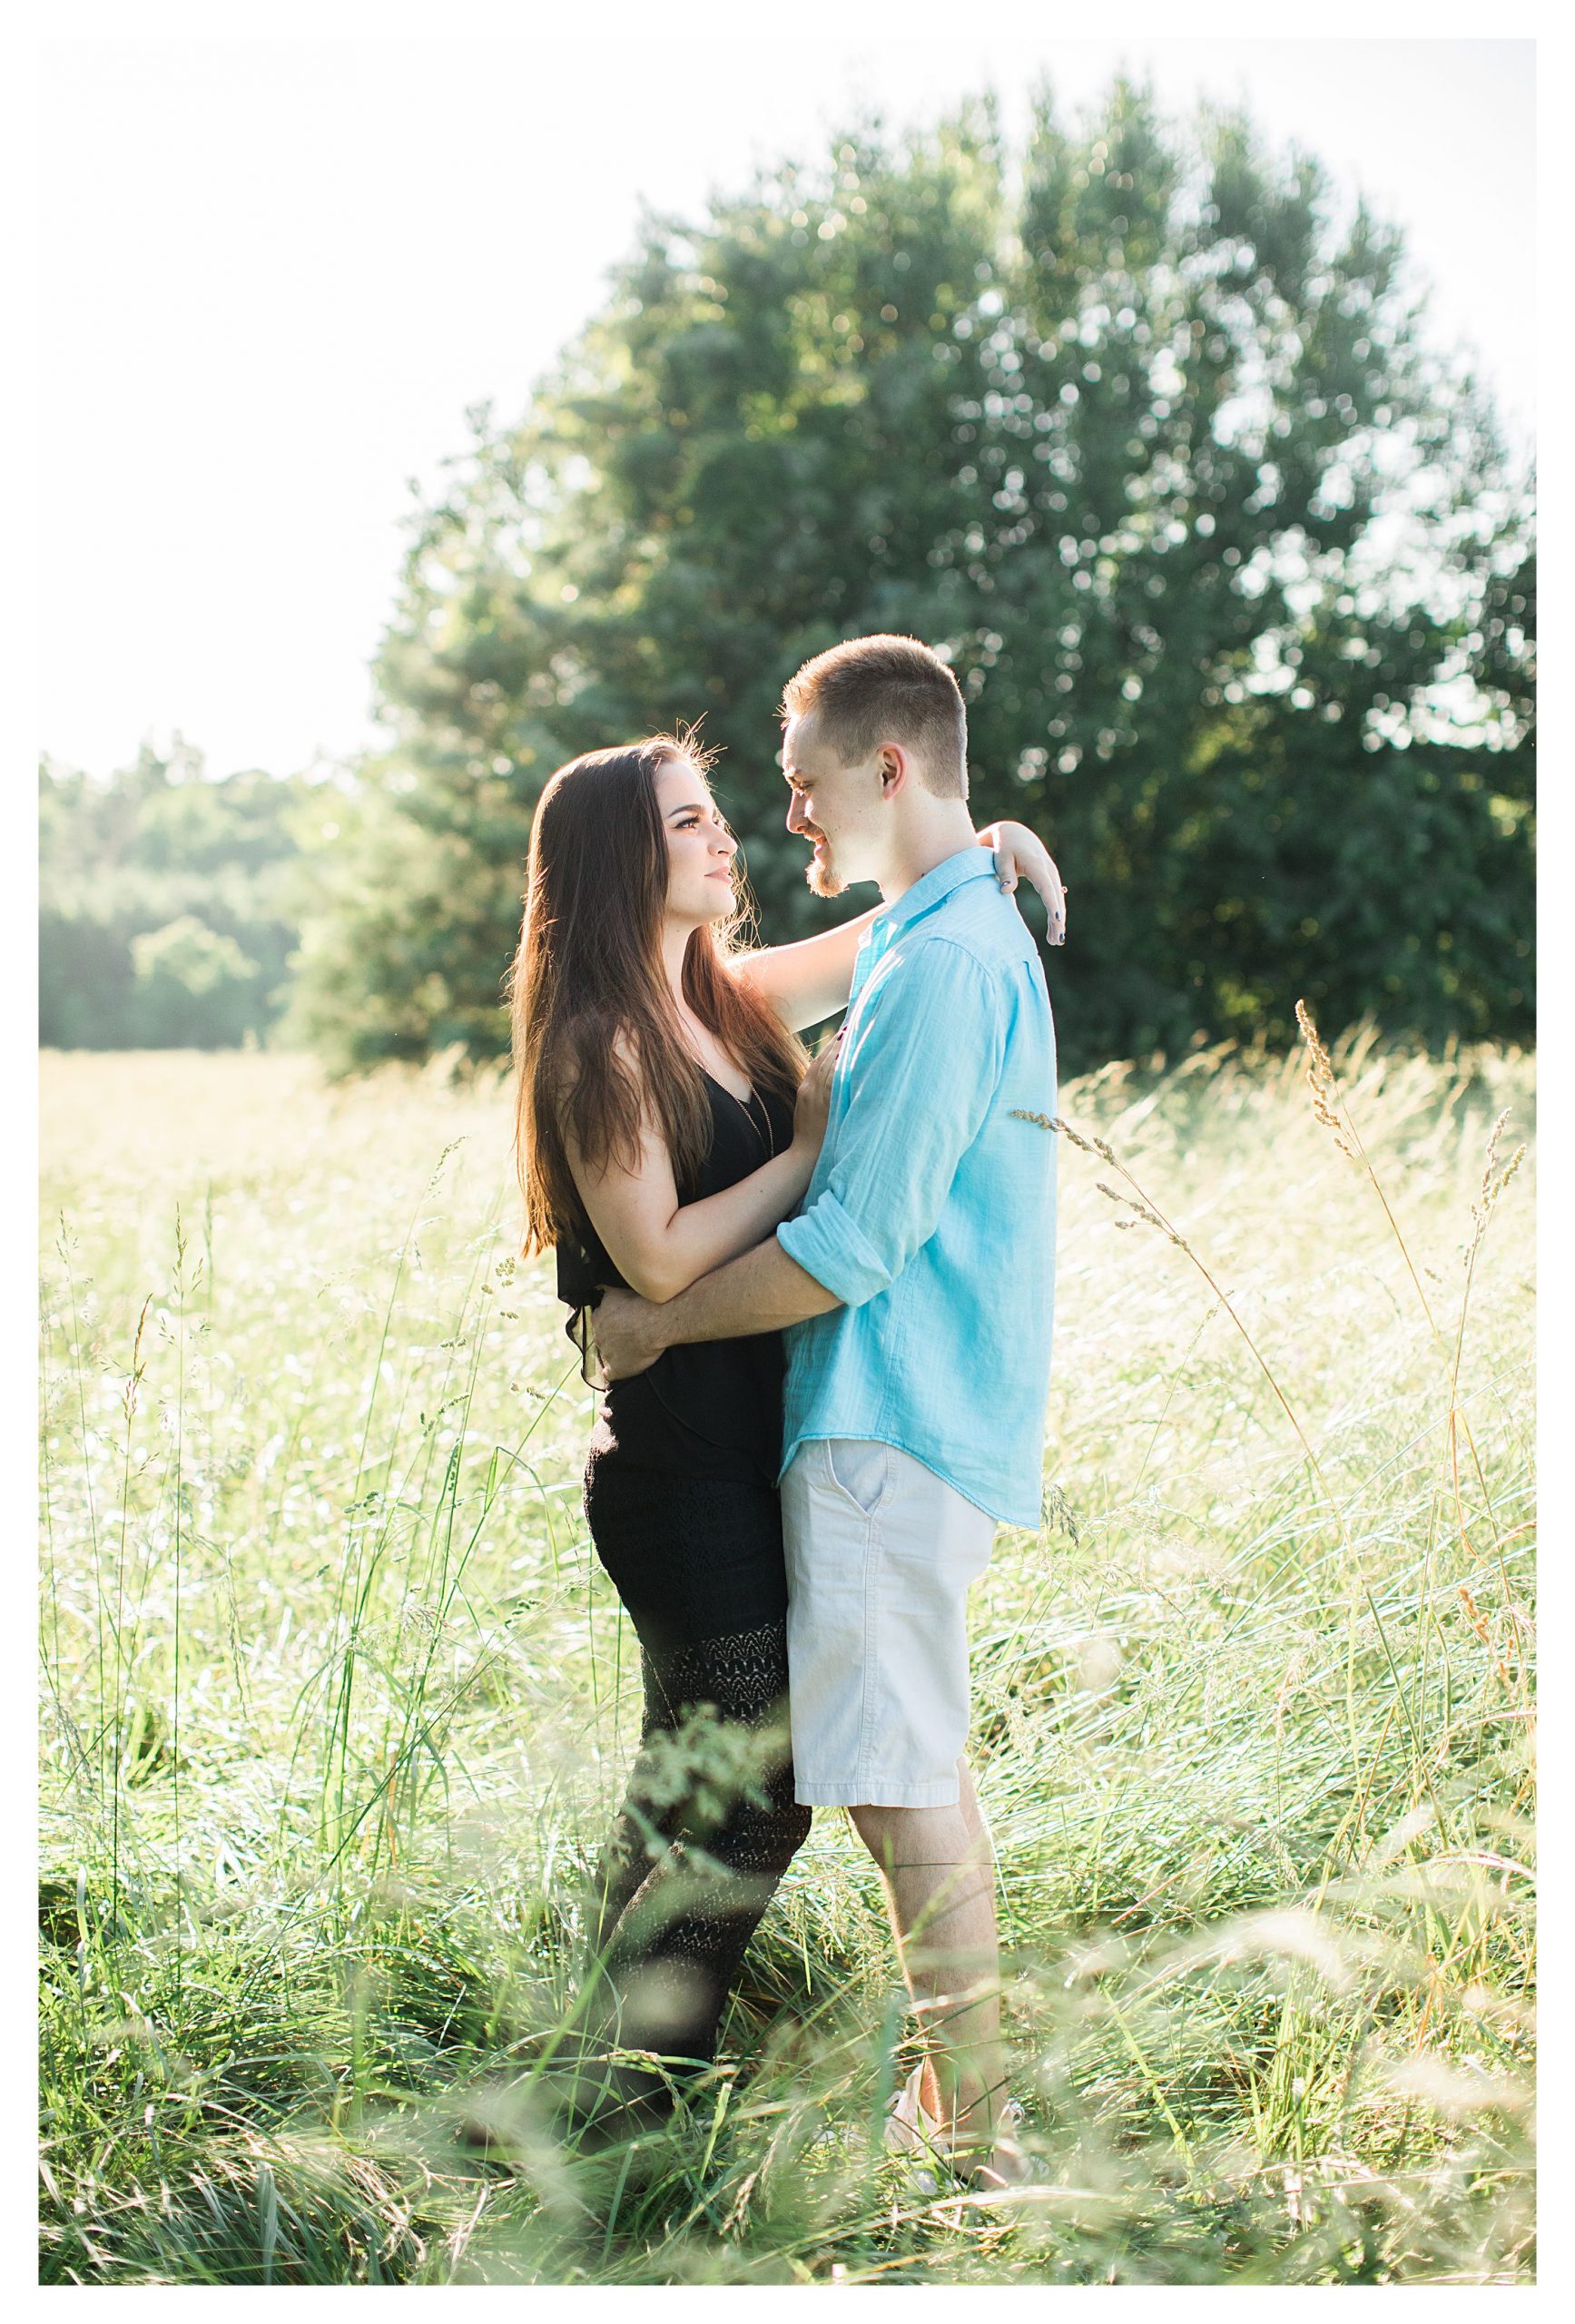 Ryan and Kayleena in a field hugging